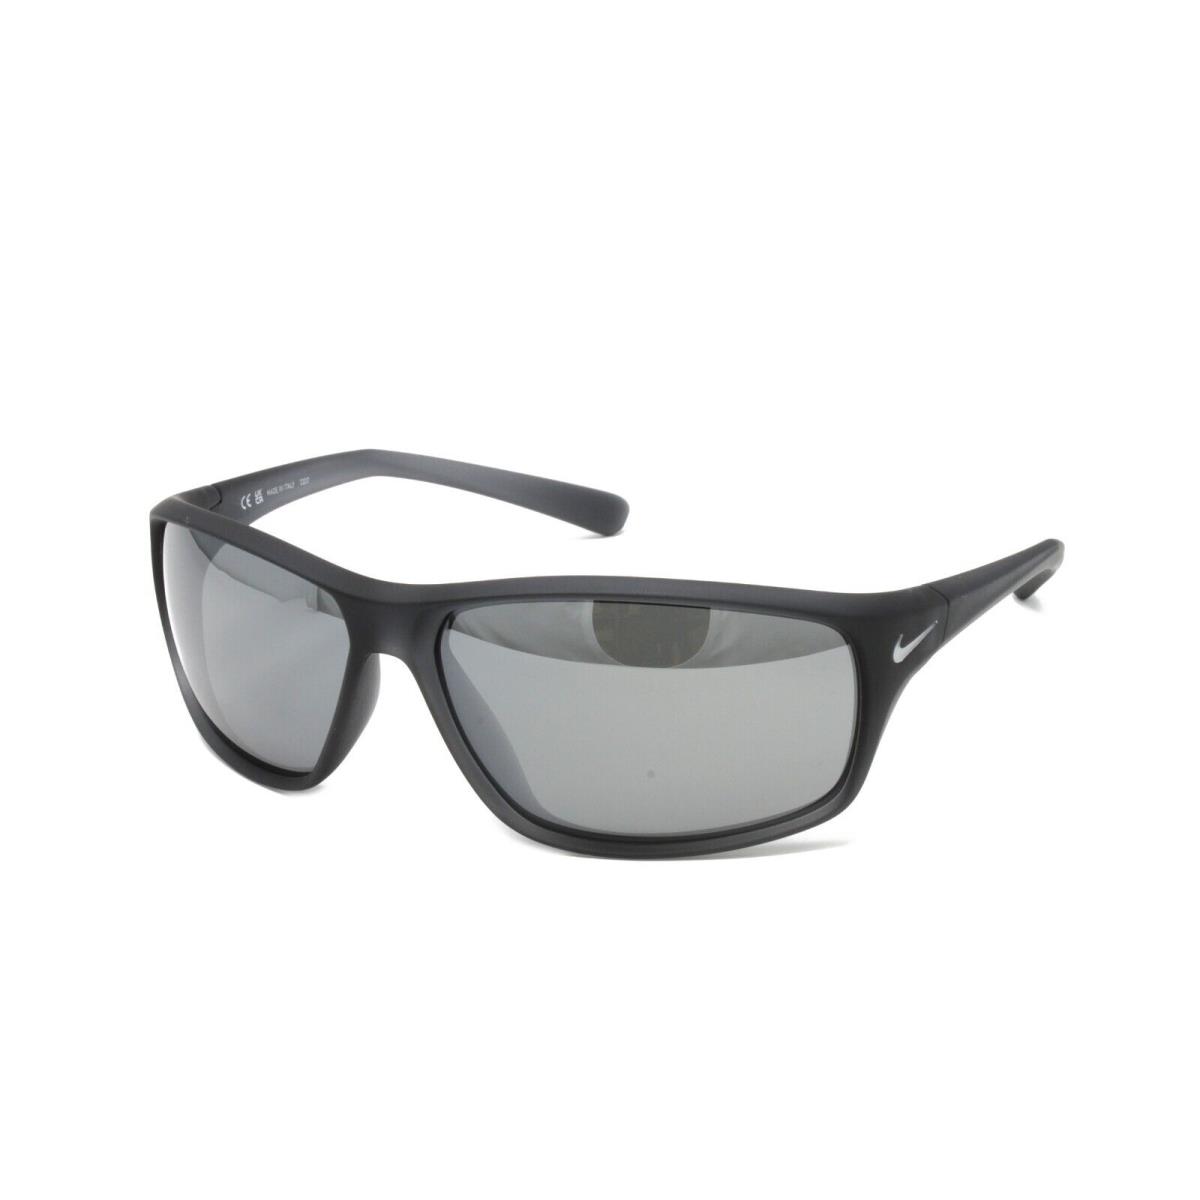 Nike Sunglasses Adrenaline EV1134 010 Anthracite Silver 65mm Grey Mirror Lens